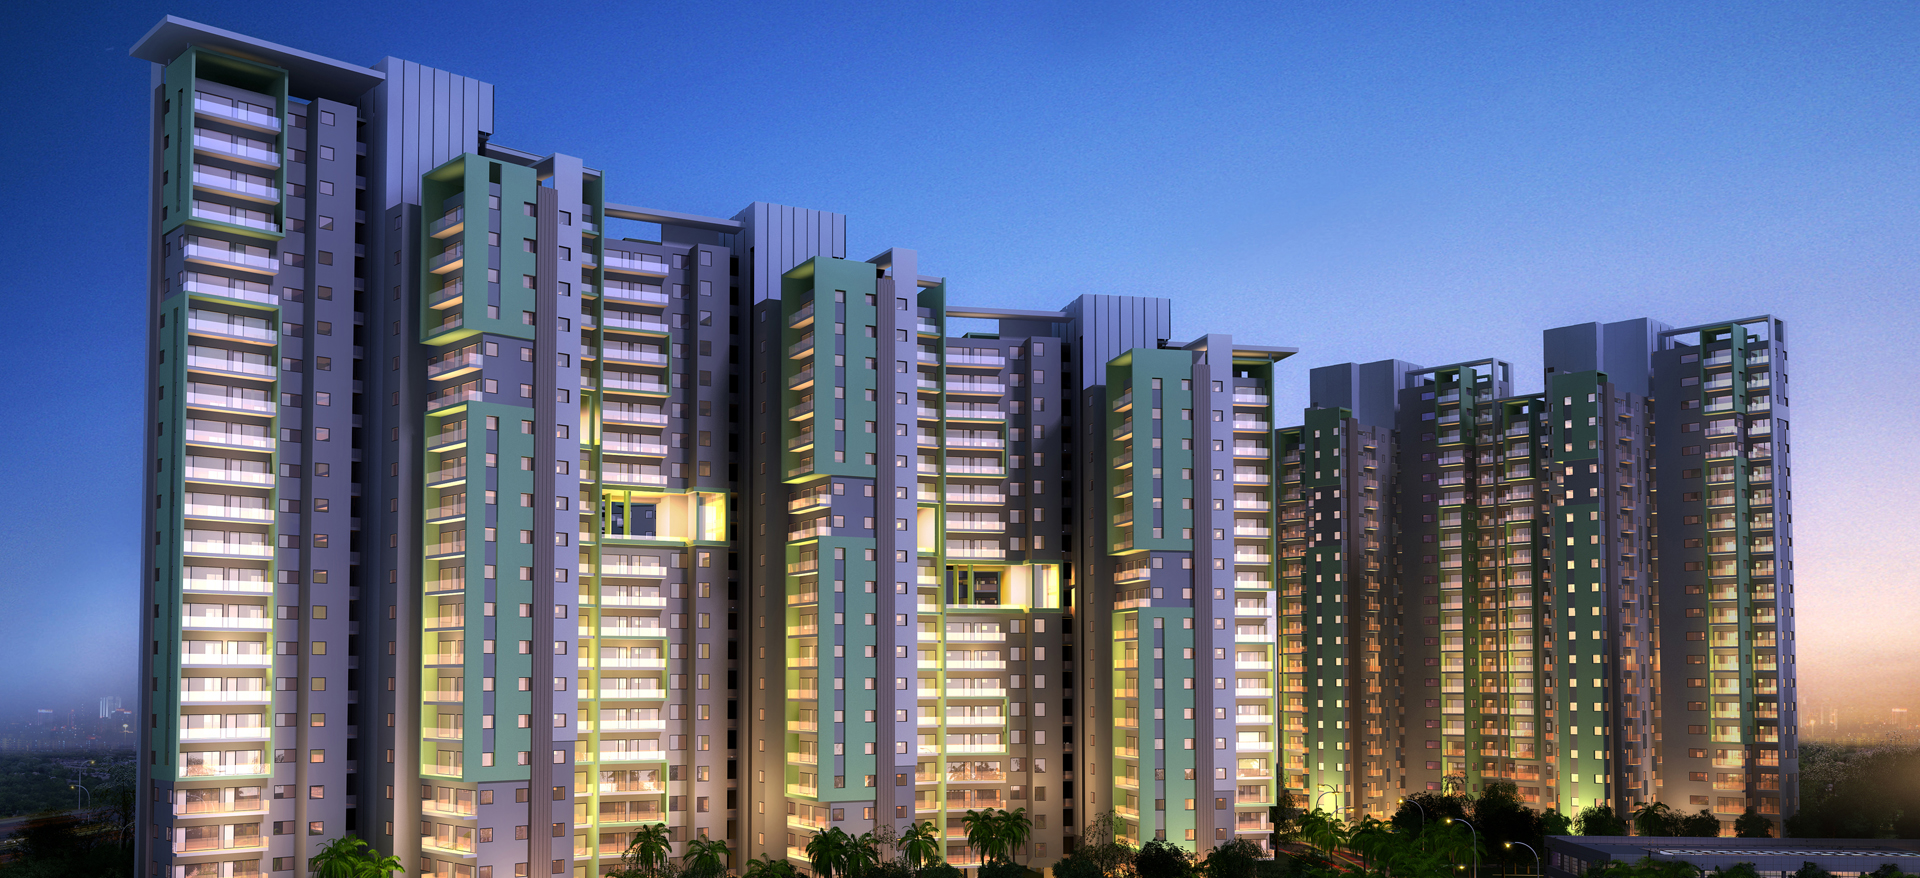 Sector M Group Housing Development, India